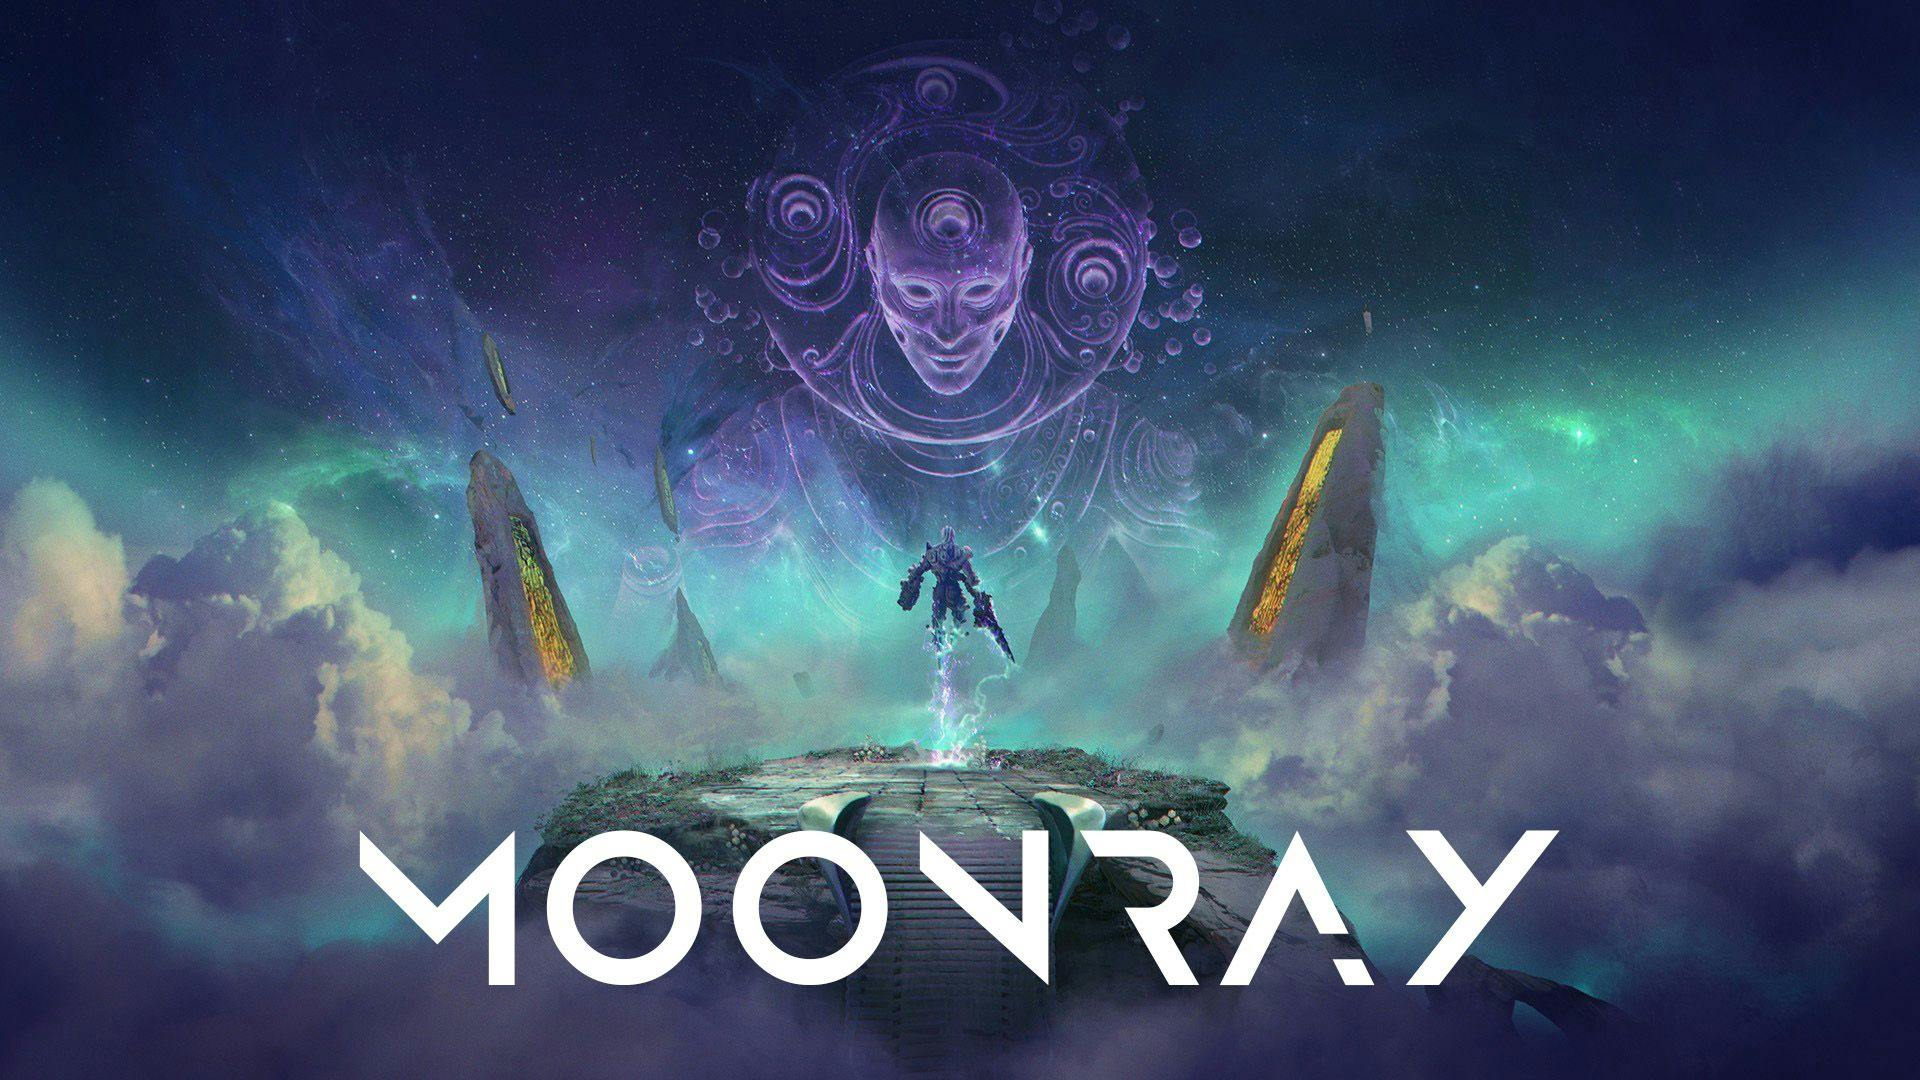 Moonray game image 1.jpg